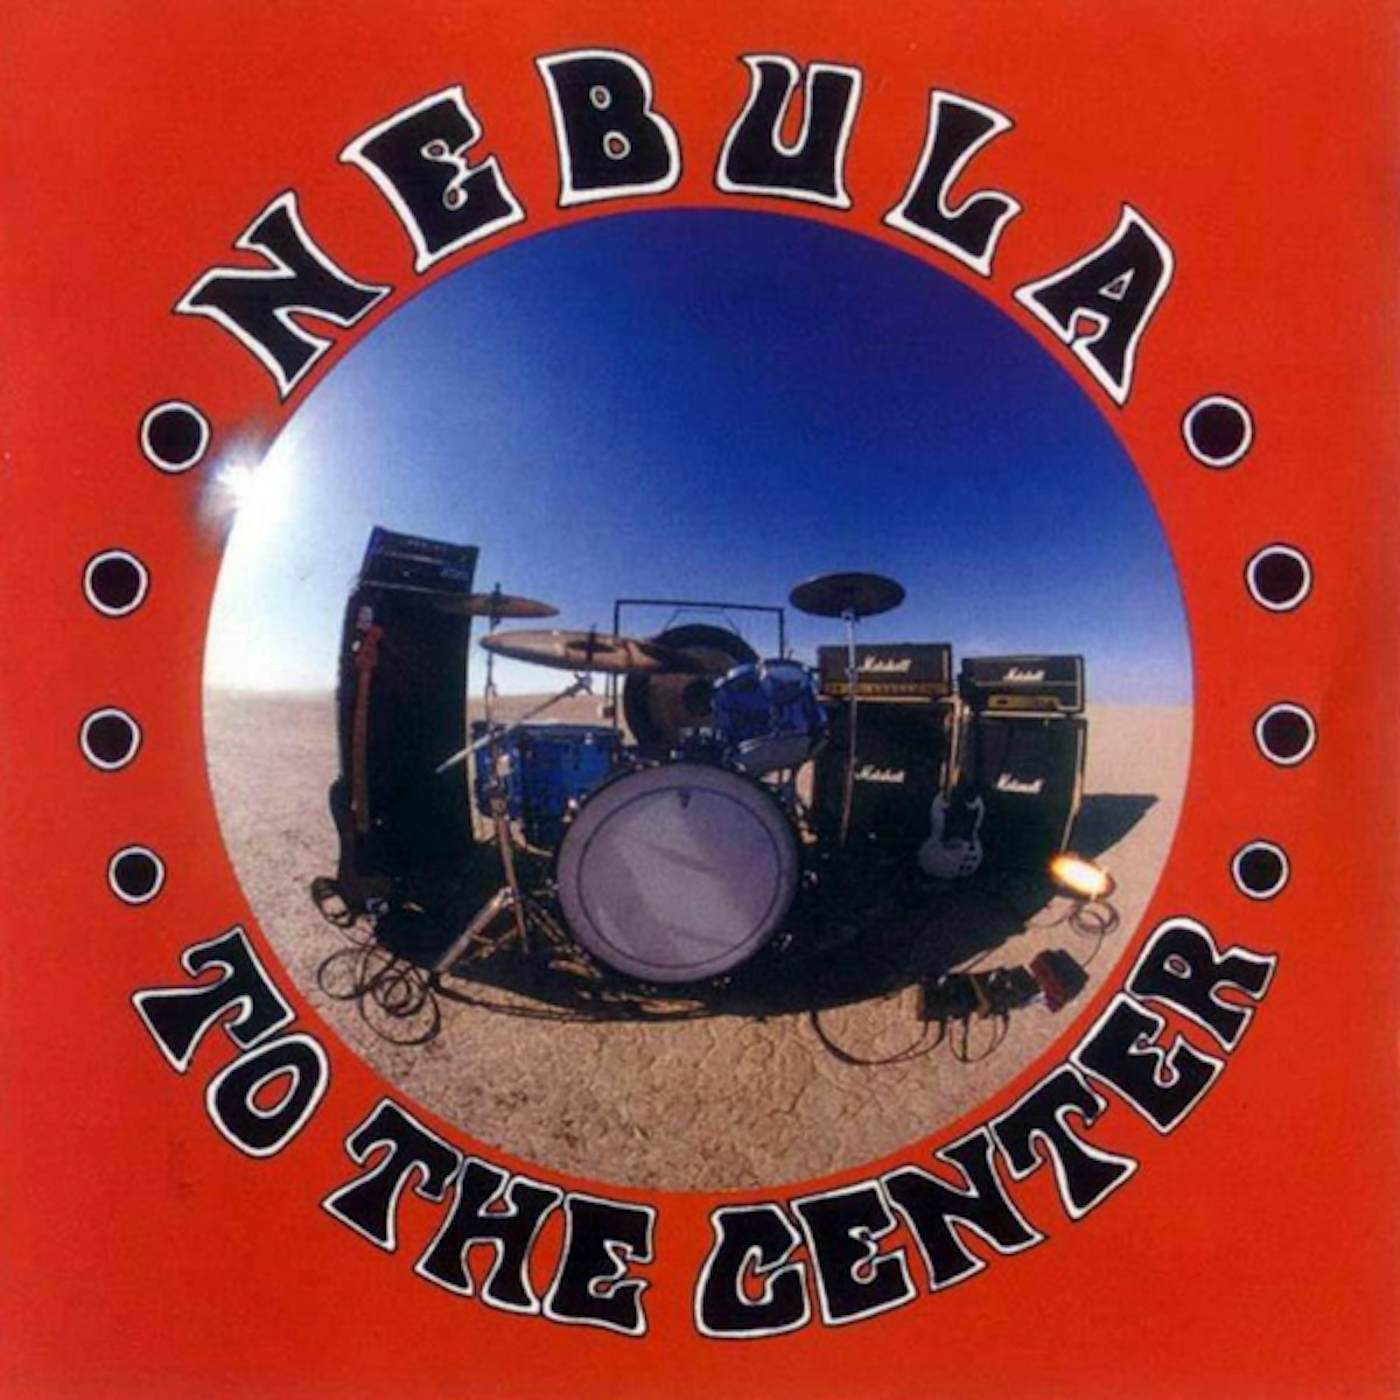 Nebula To The Center (Repress) Vinyl Record